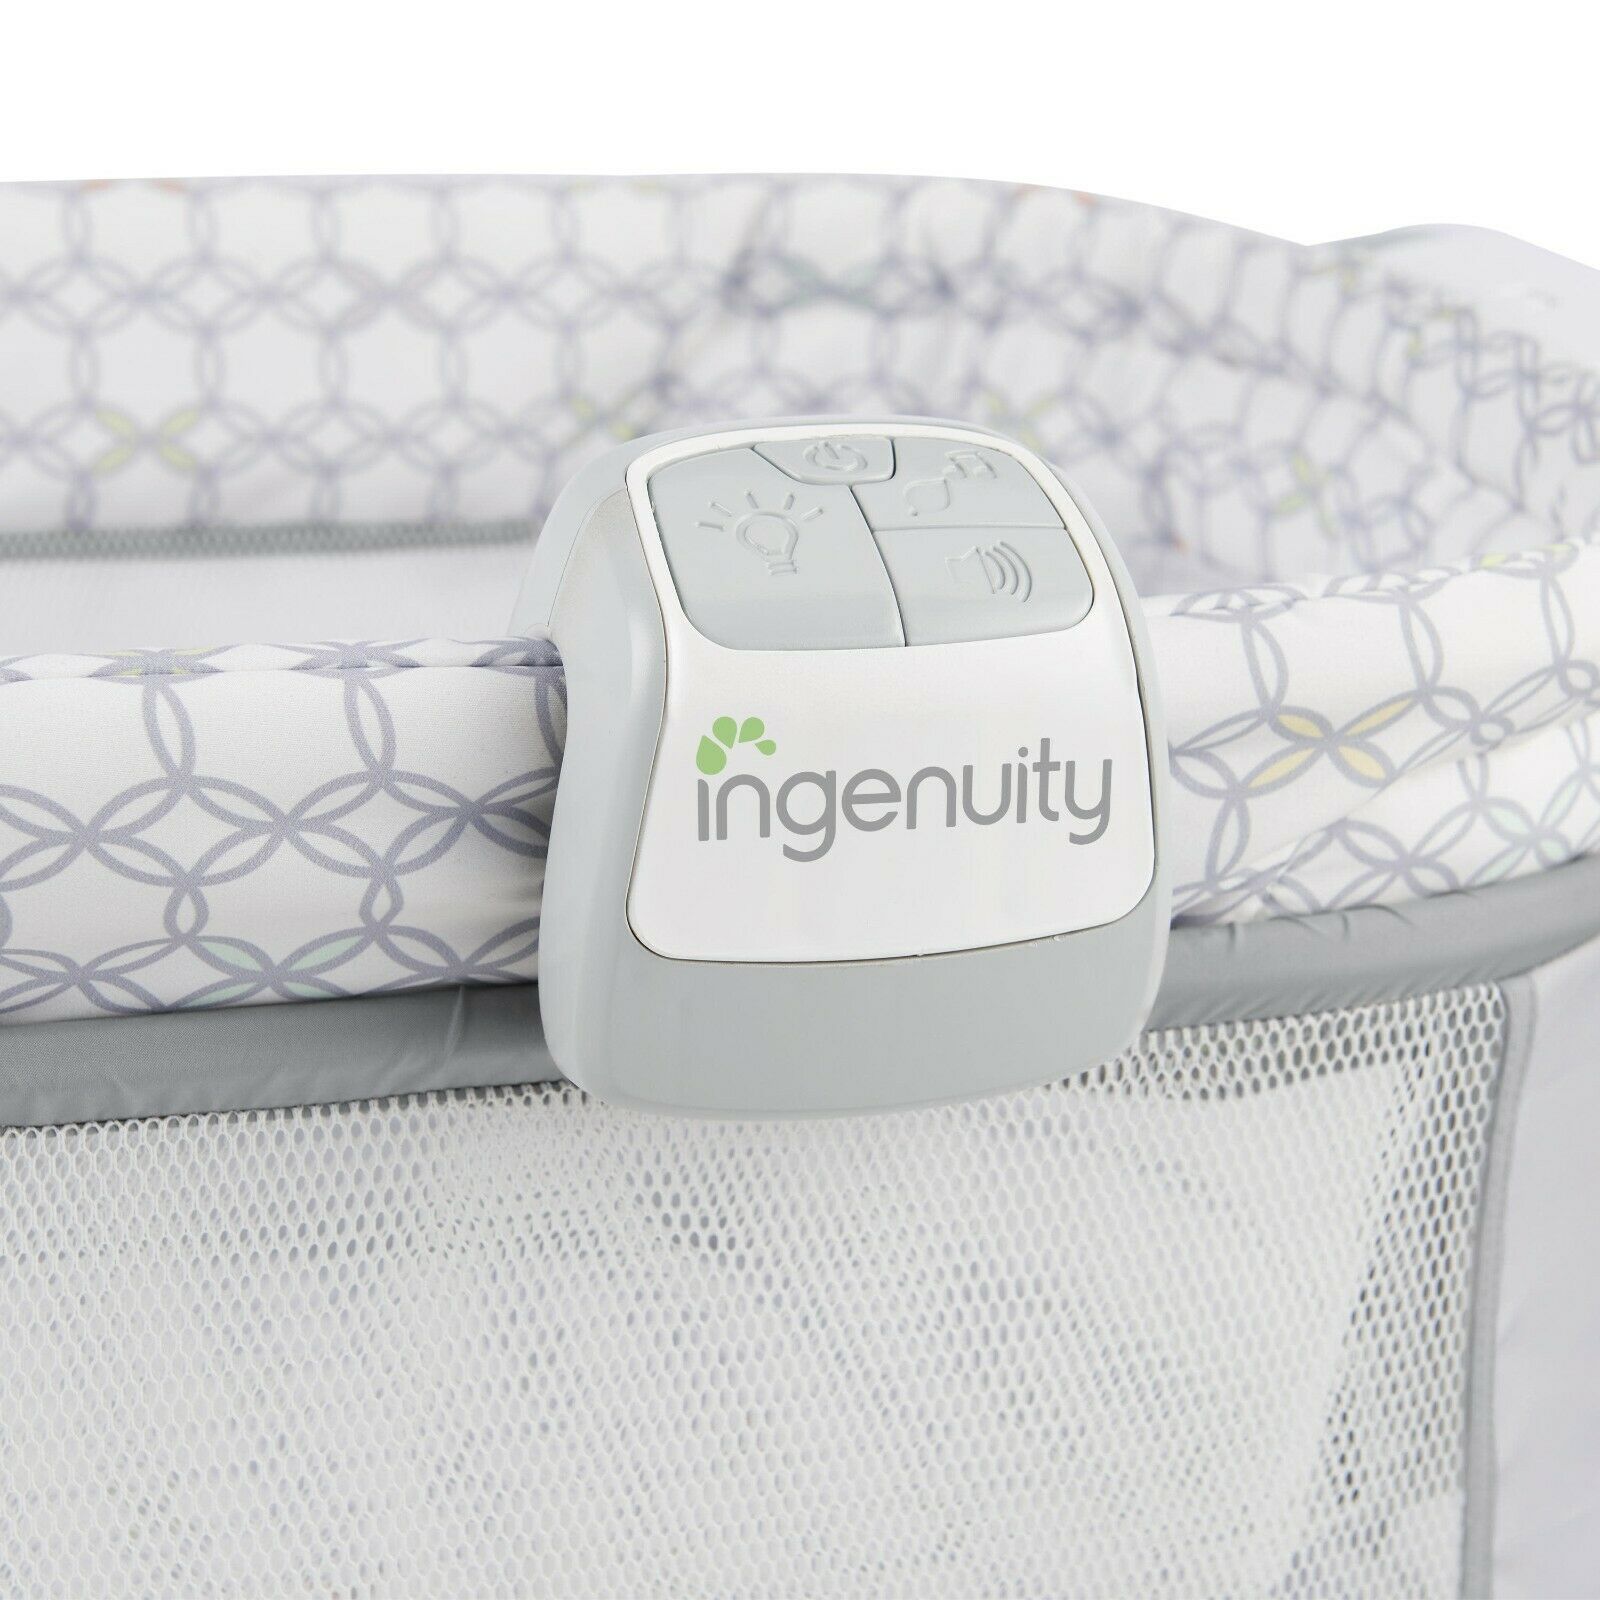 Baby Infant Bedside Bassinet Cradle Crib Portable Nursery Furniture Bed  Lullaby